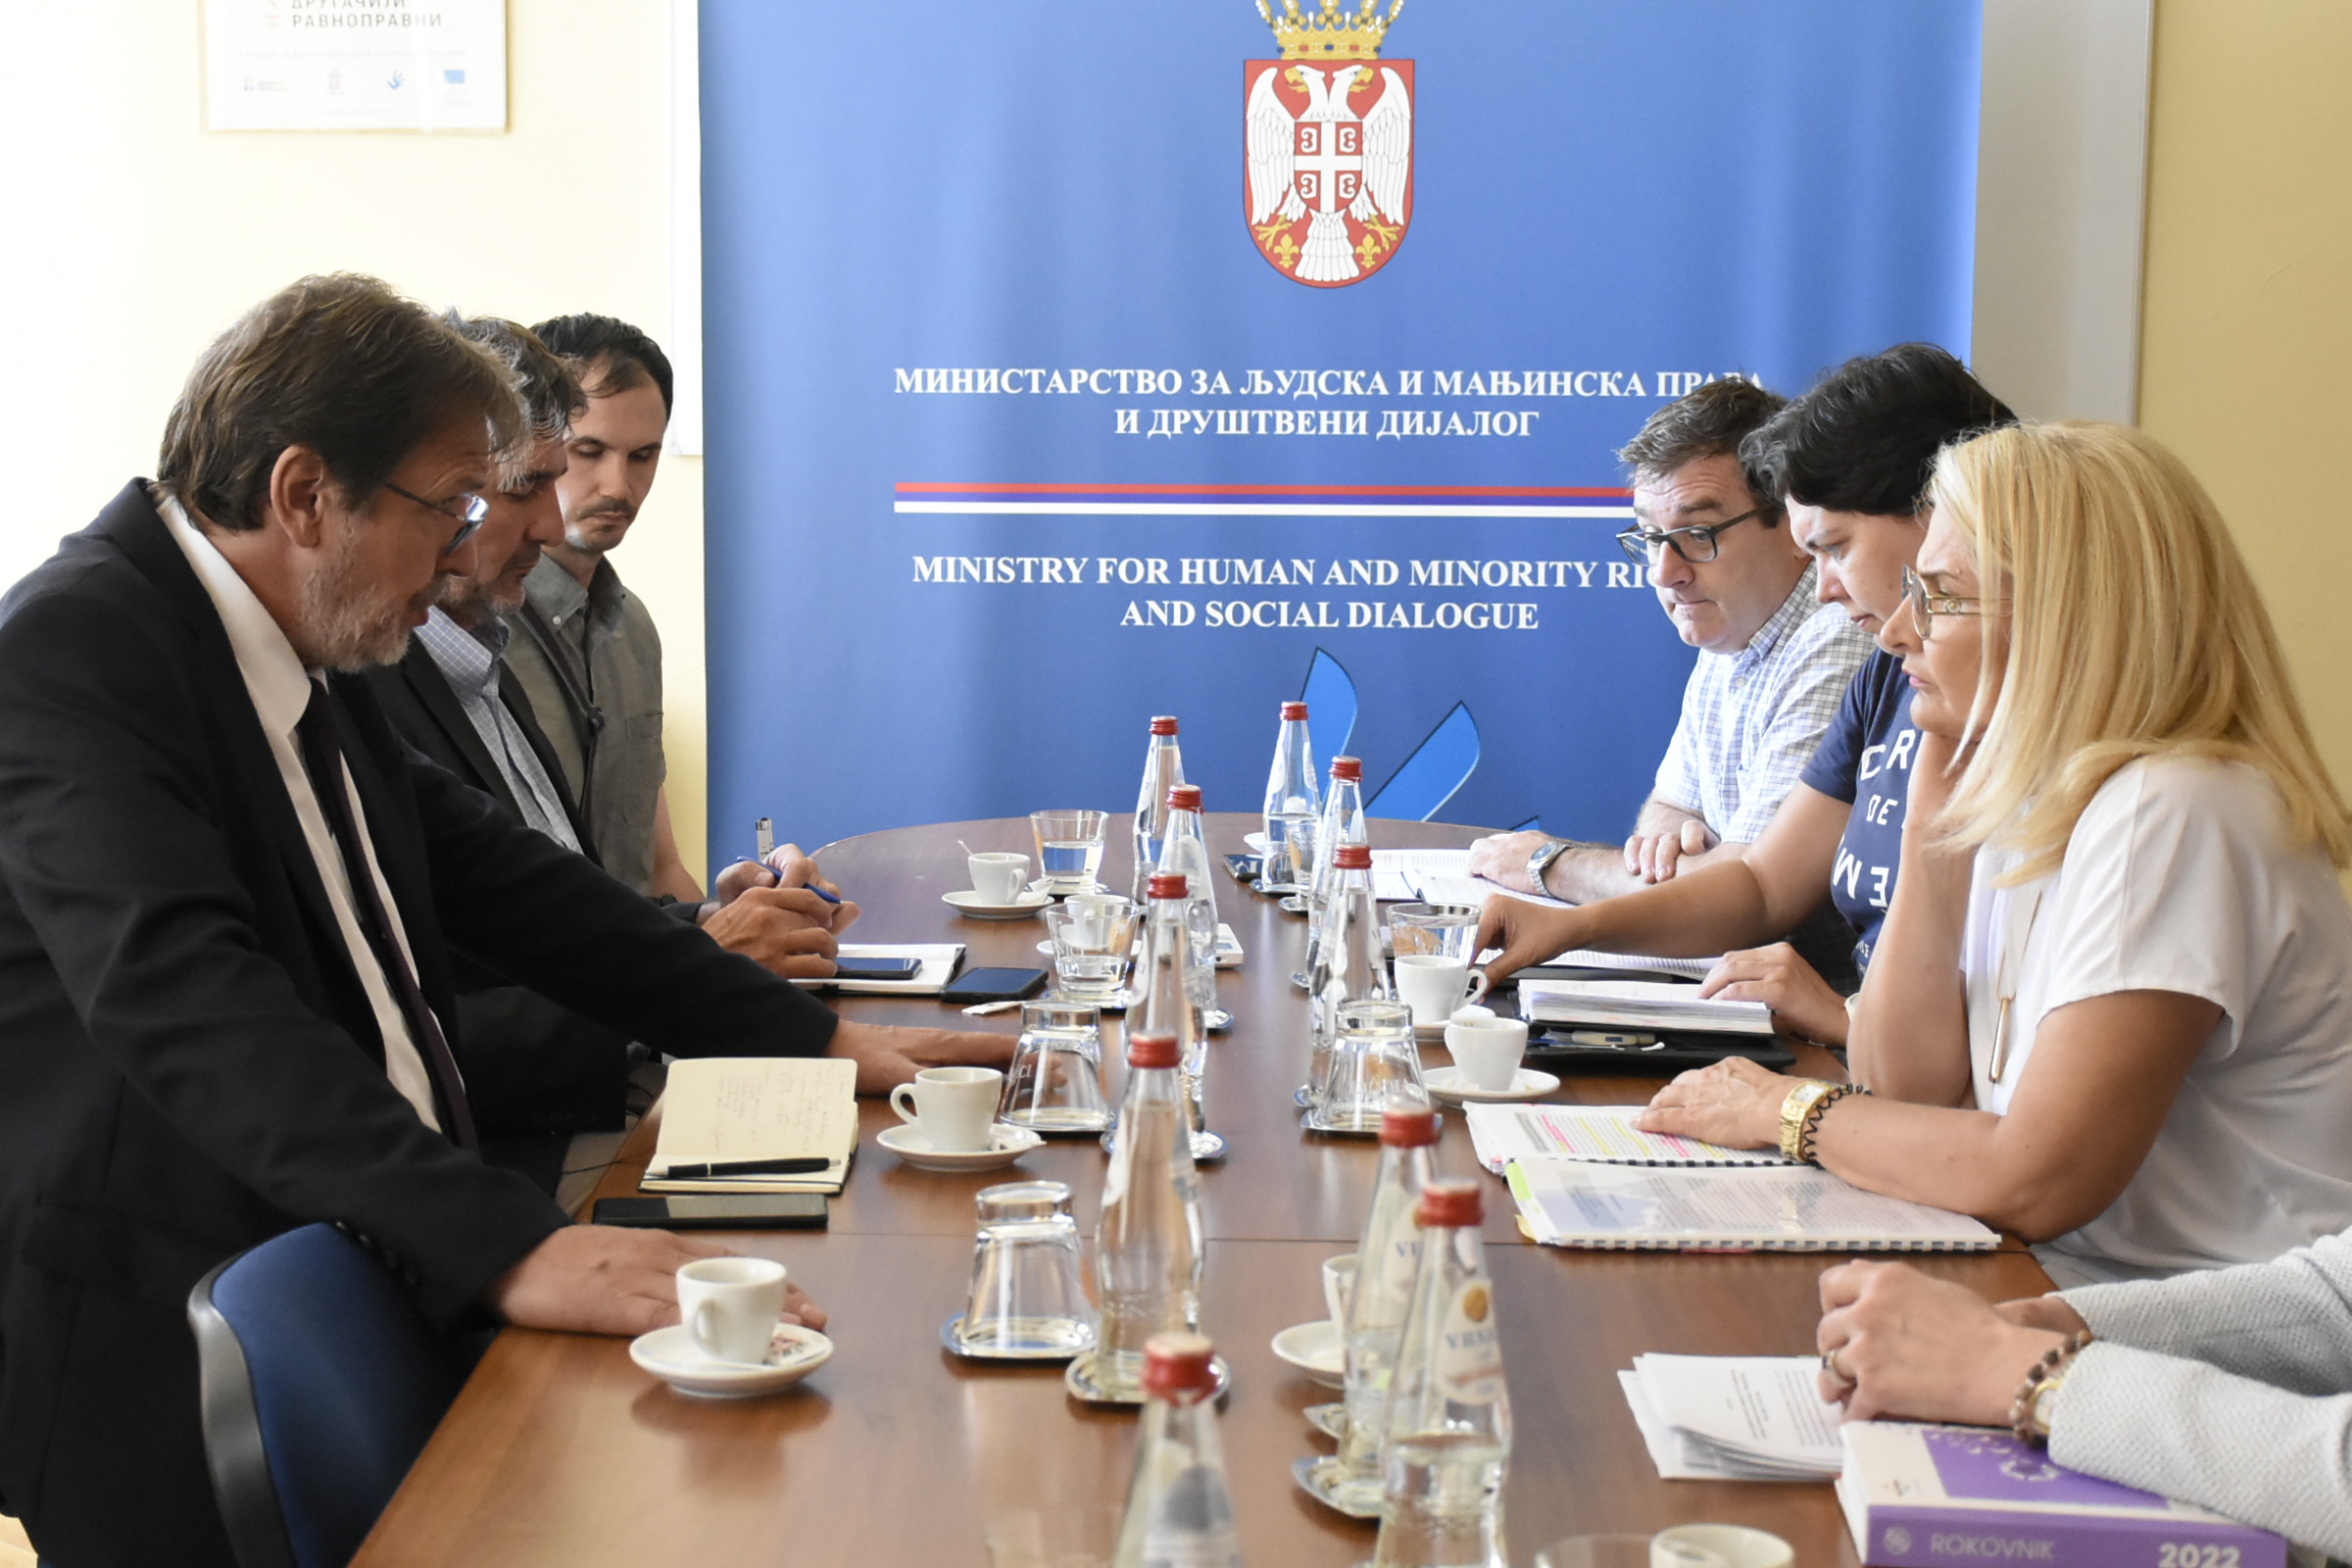 Žigmanov i Miščević o aktivnostima u procesu evropskih integracija